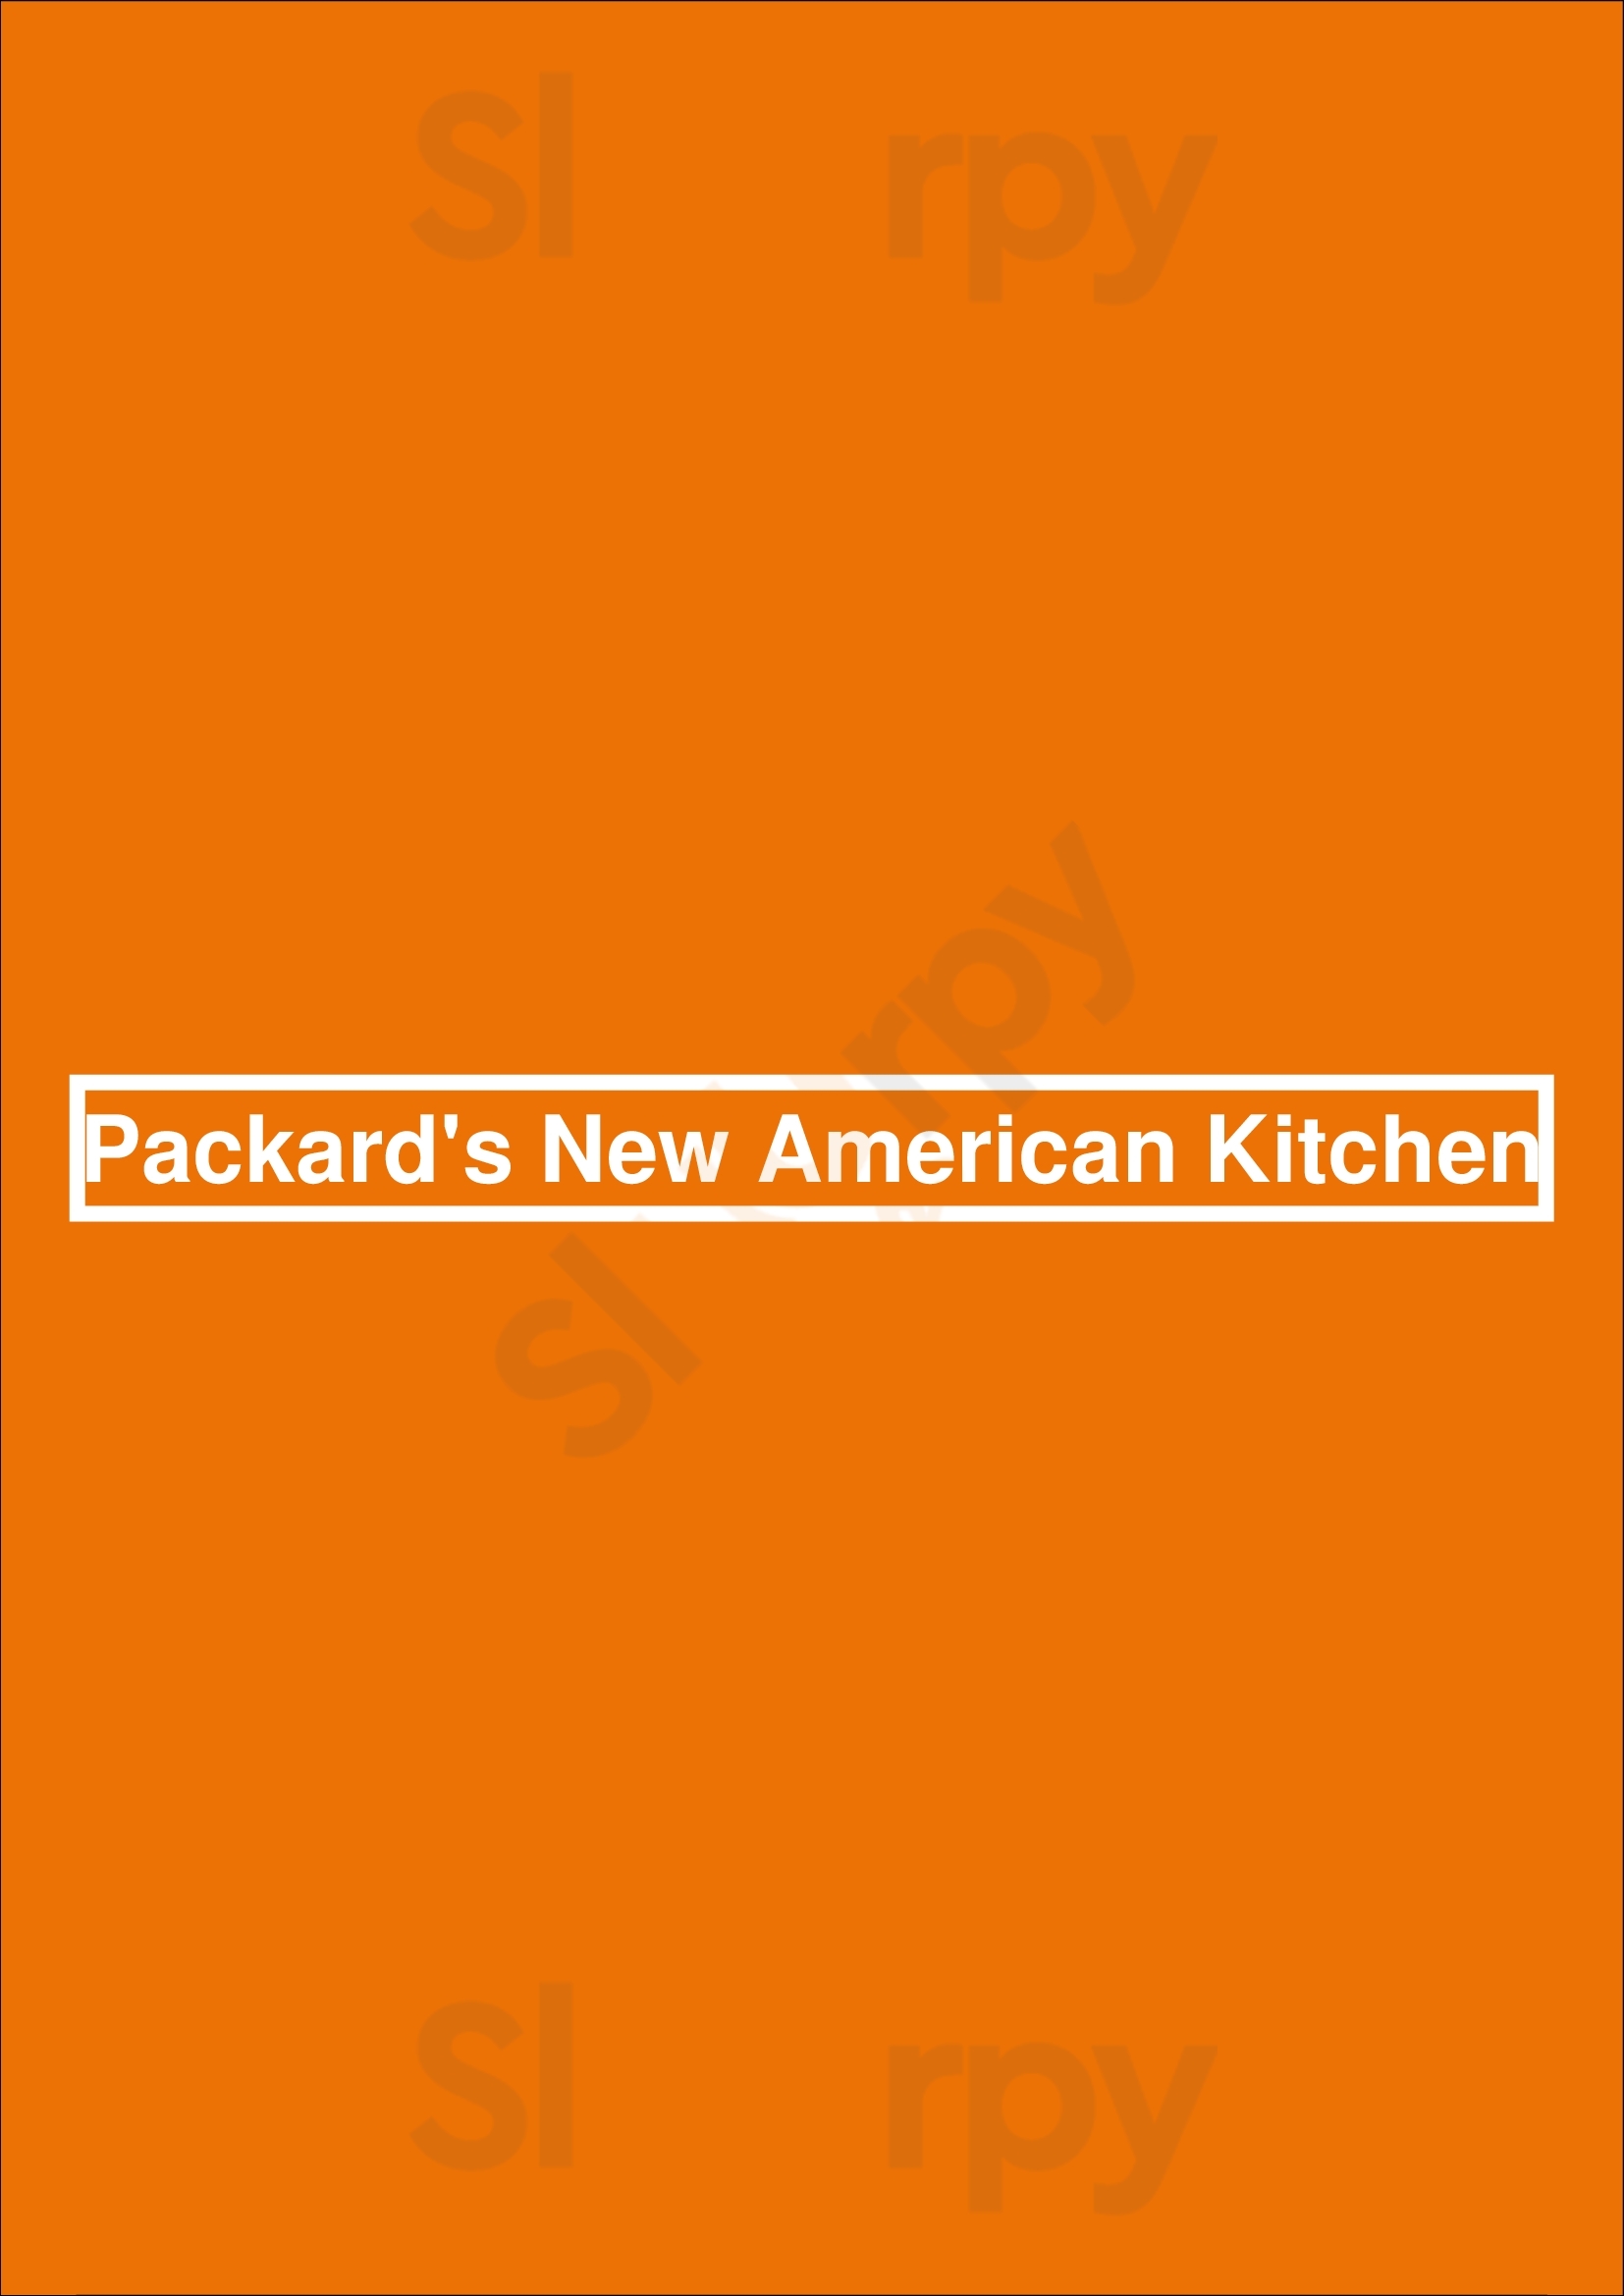 Packard's New American Kitchen Oklahoma City Menu - 1